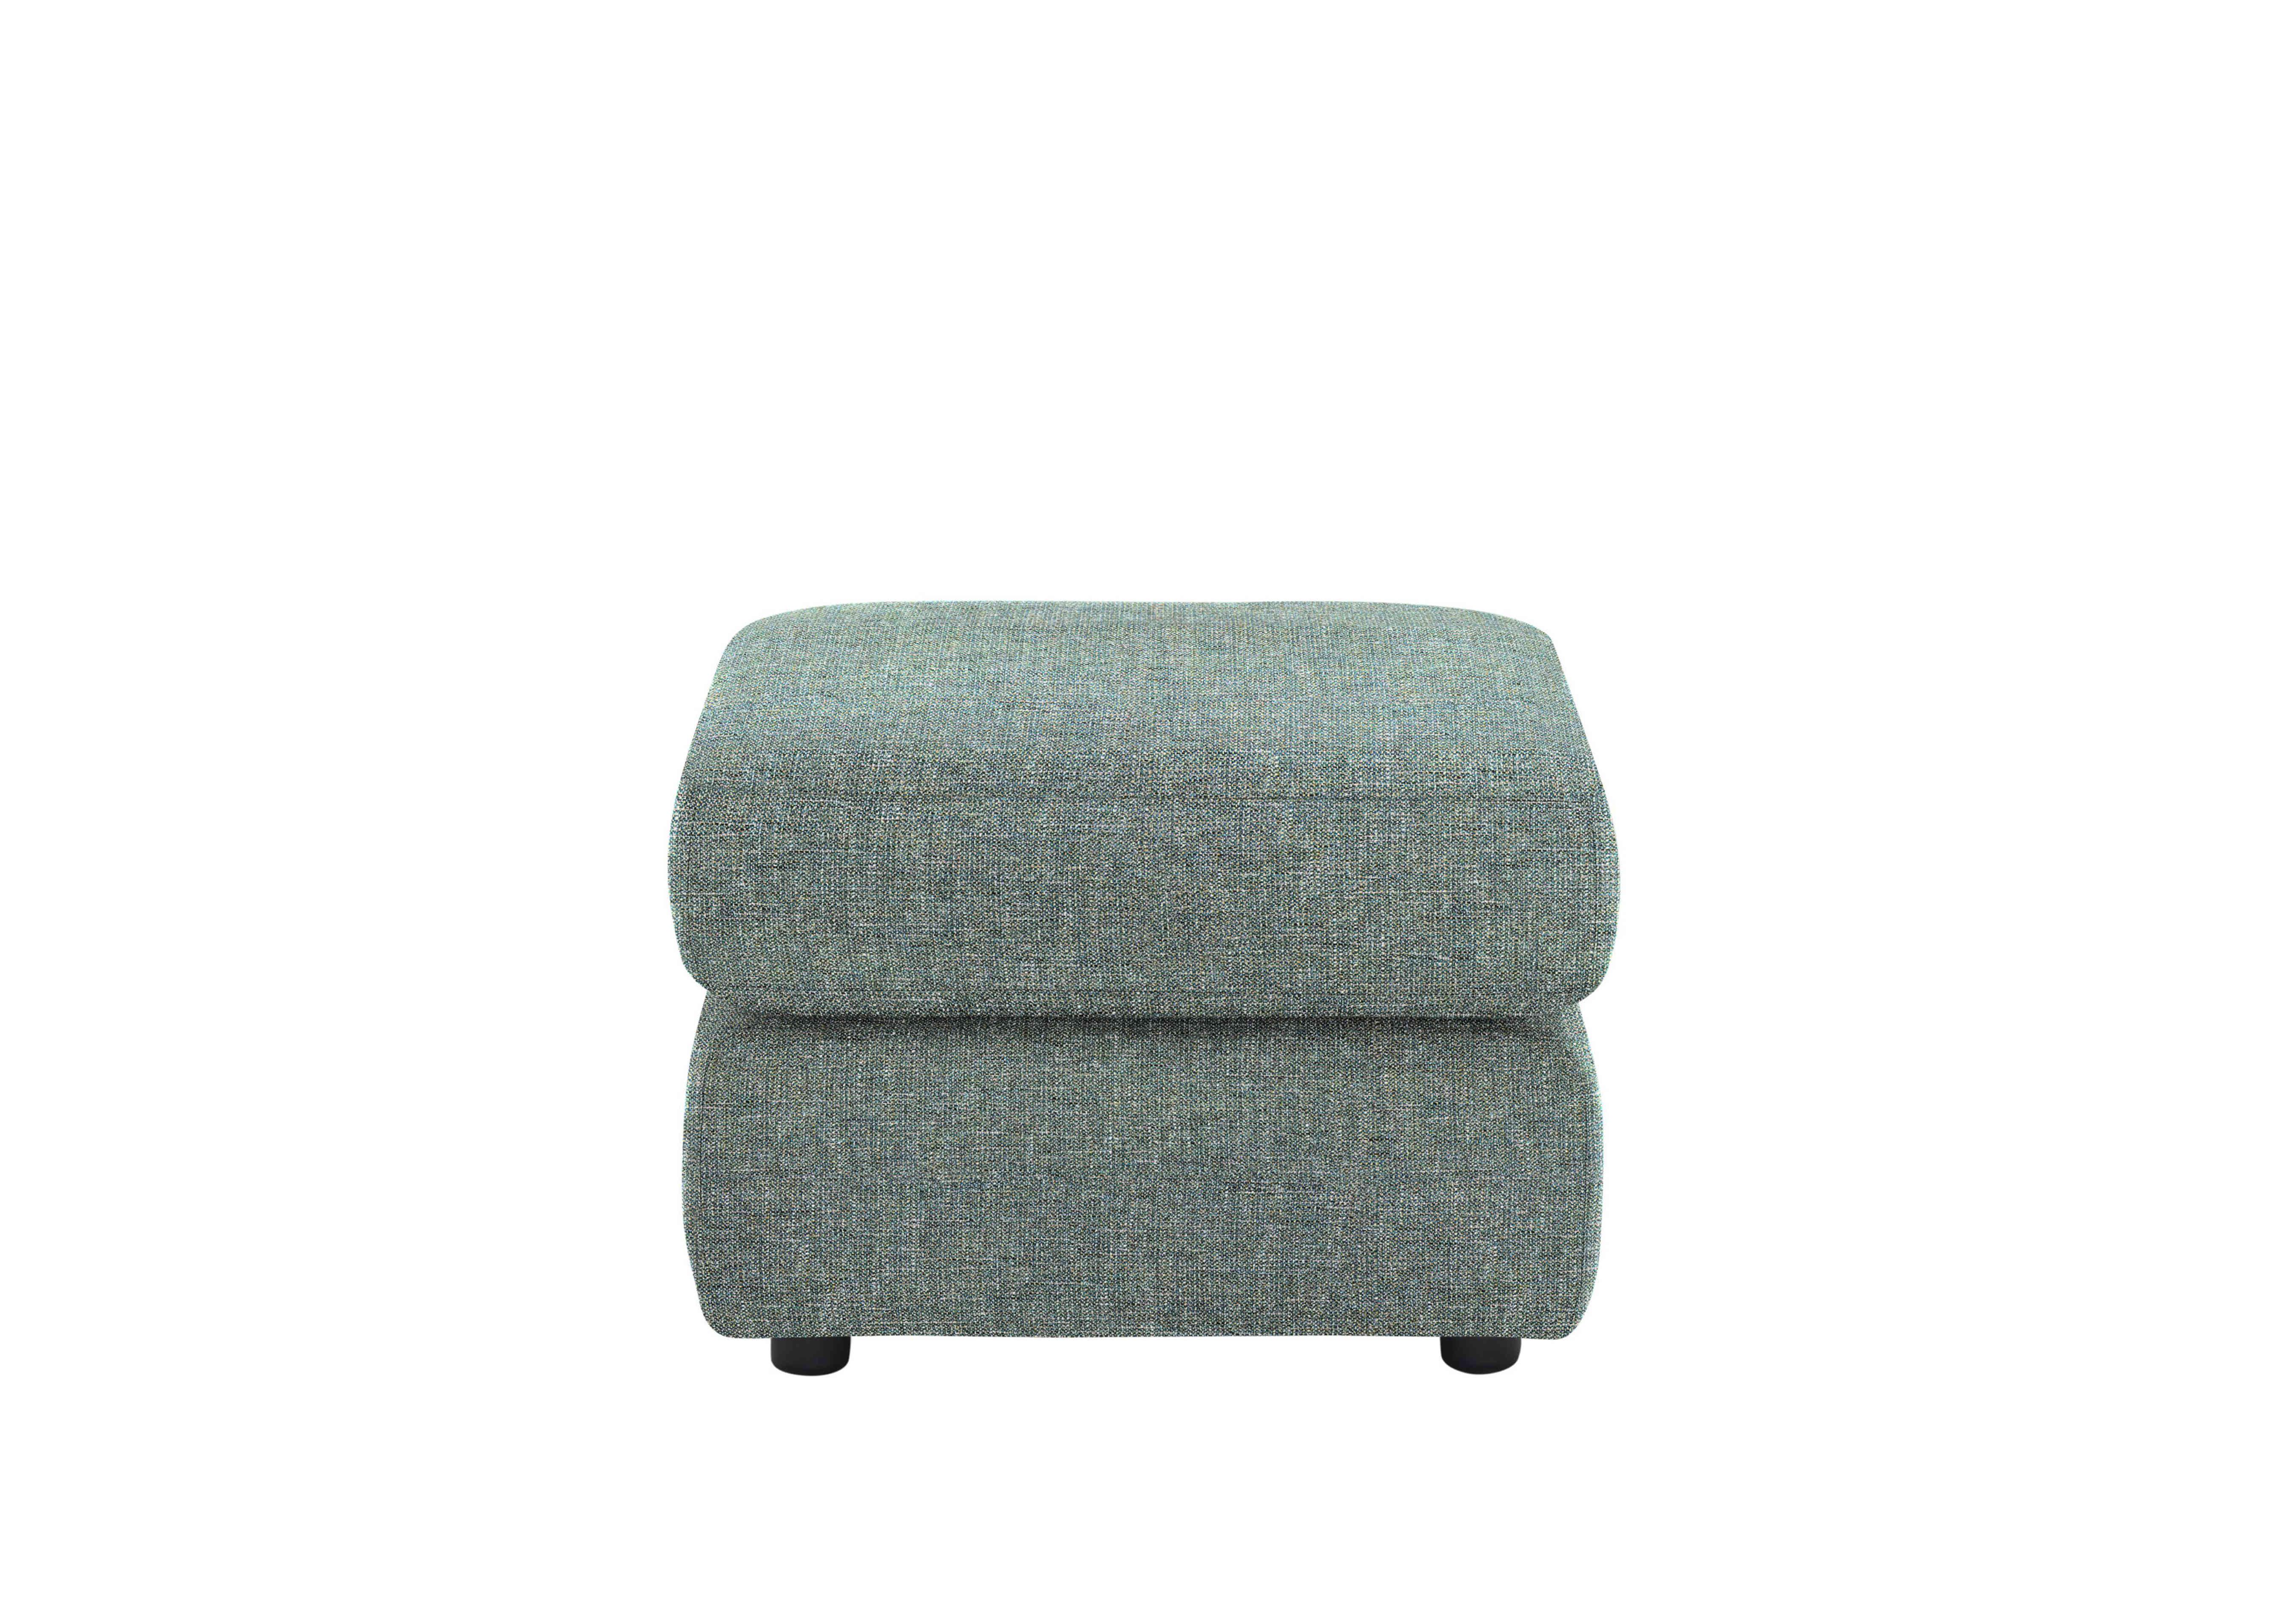 Avon Fabric Footstool in A020 Dapple Kingfisher on Furniture Village